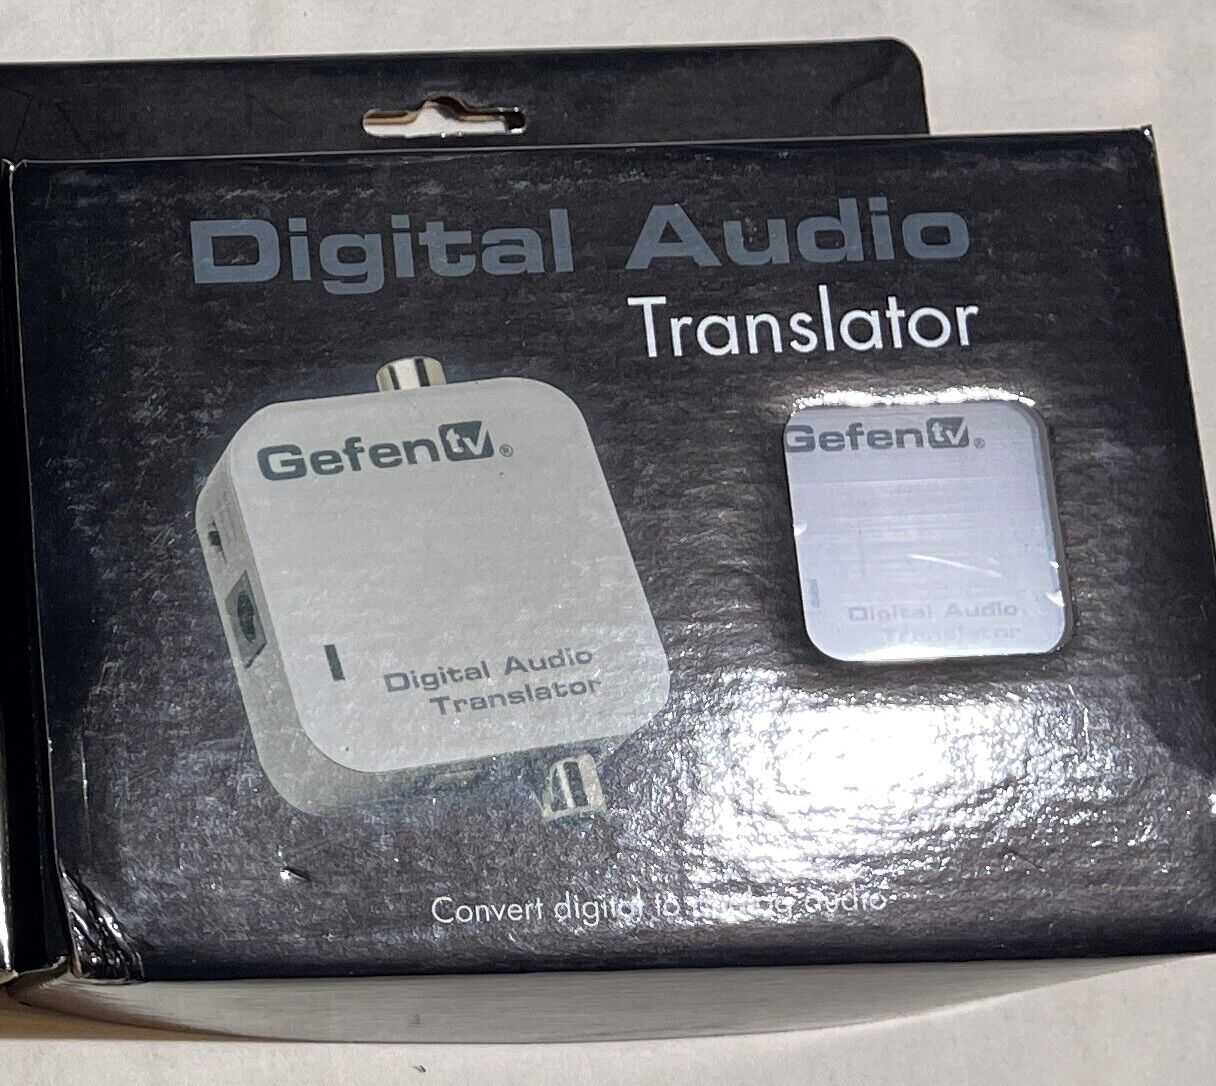 New Gefen Digital Audio Translator GTV-DIGAUDT-141 Coaxial/Optical to Analog